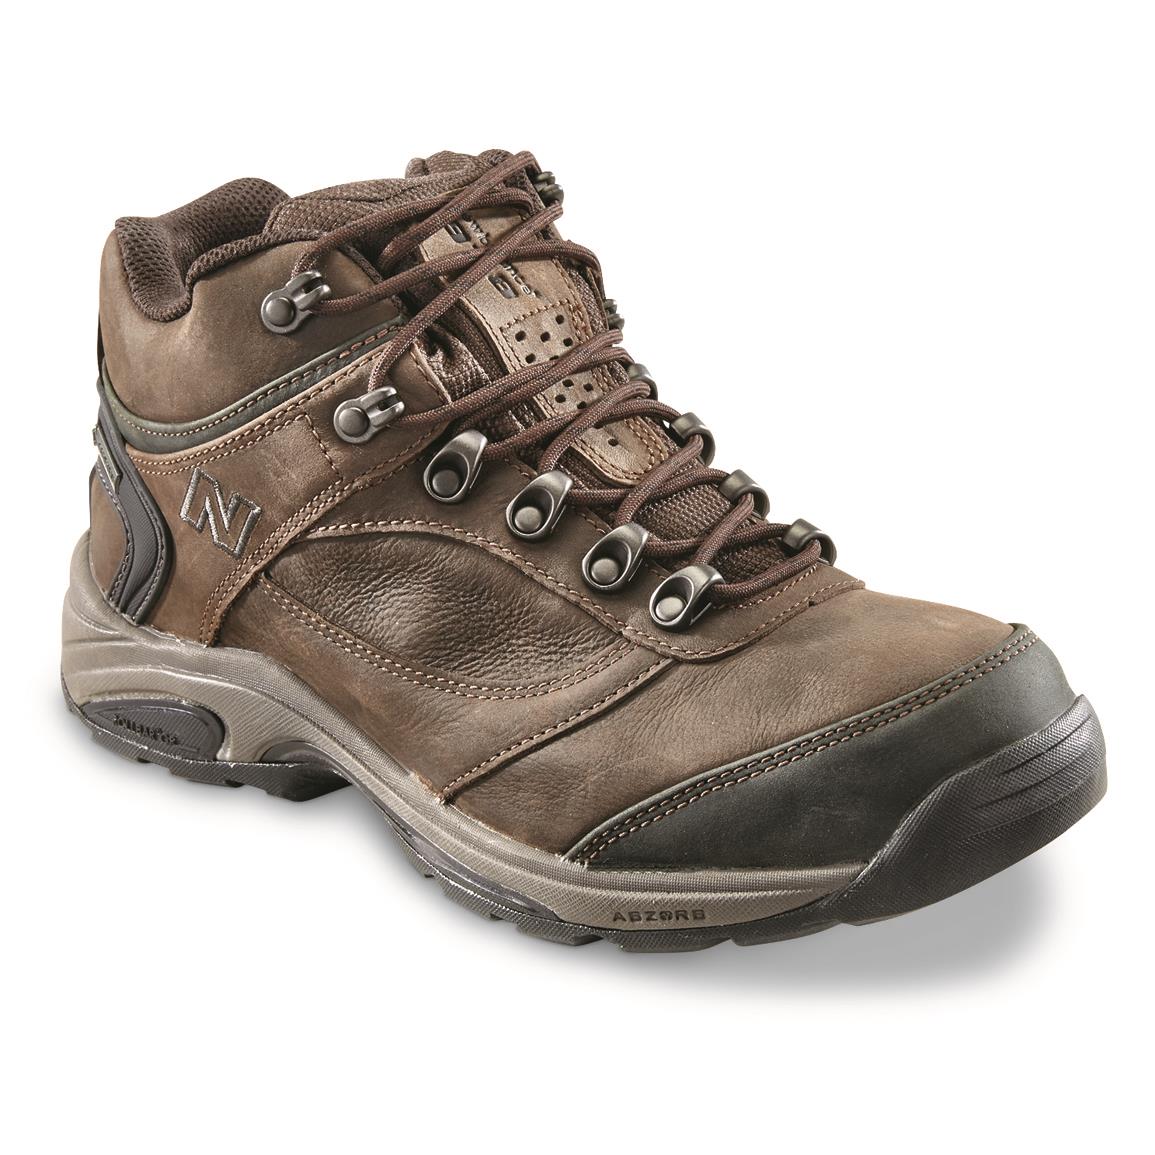 New Balance Men's 978 Waterproof Trail Walking Shoes, GORE-TEX, Brown